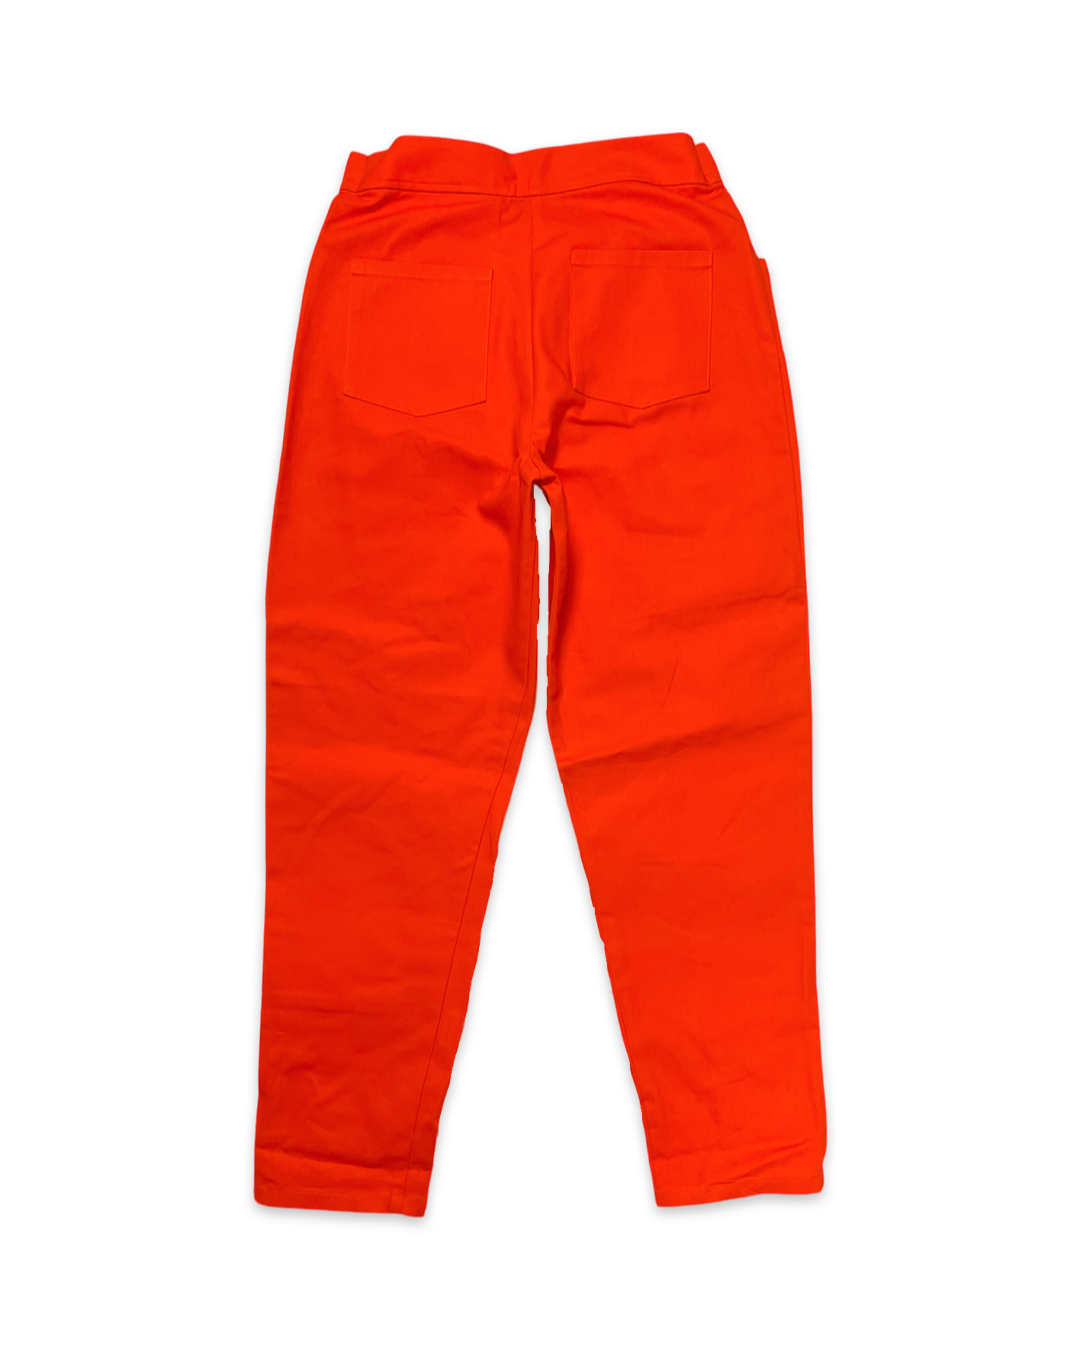 Men's Utility Pant in Bright Orange